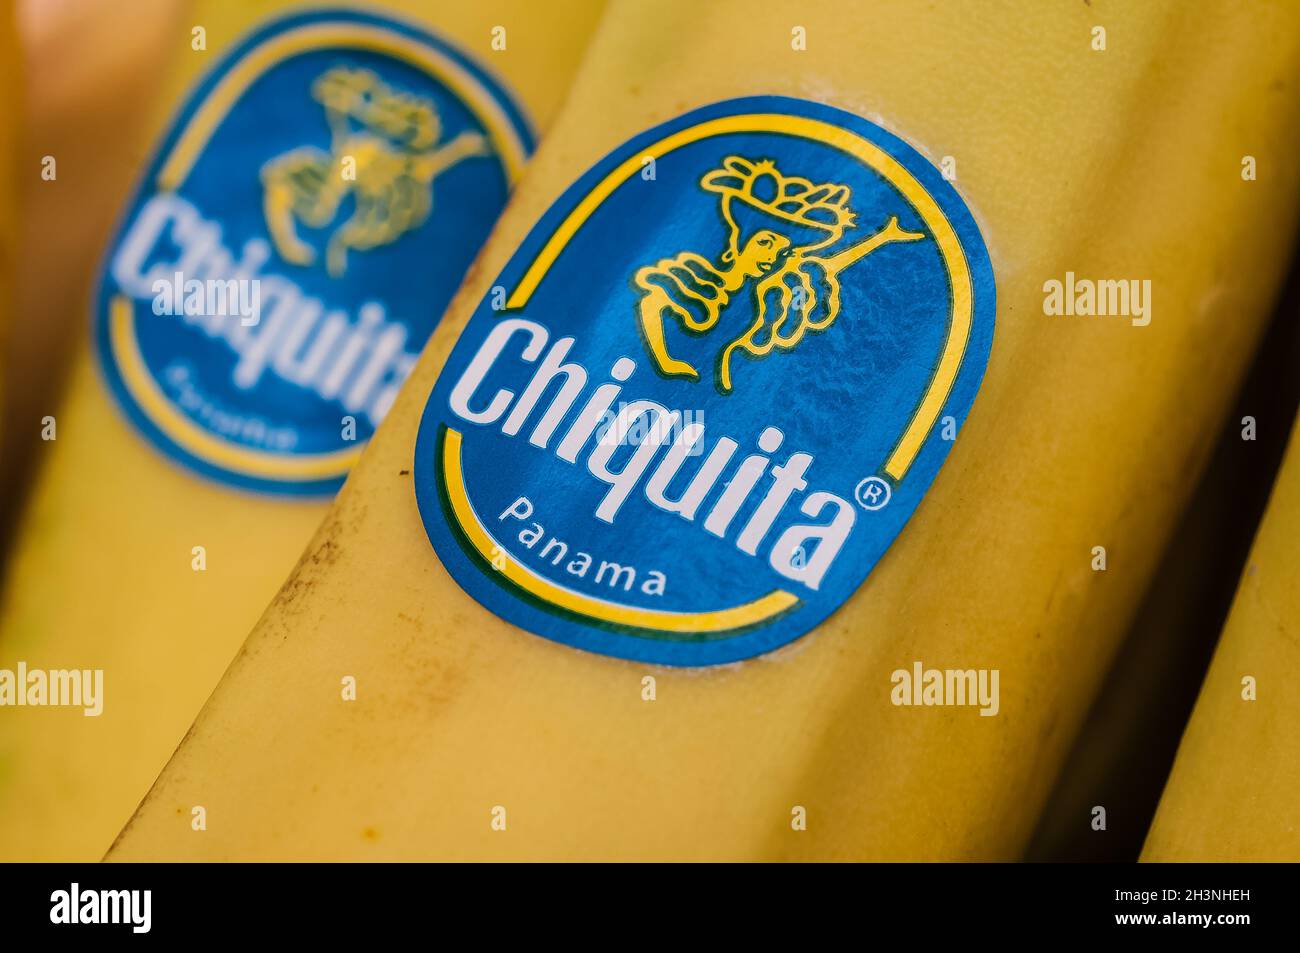 Chiquita bananen supermarkt Foto Stock